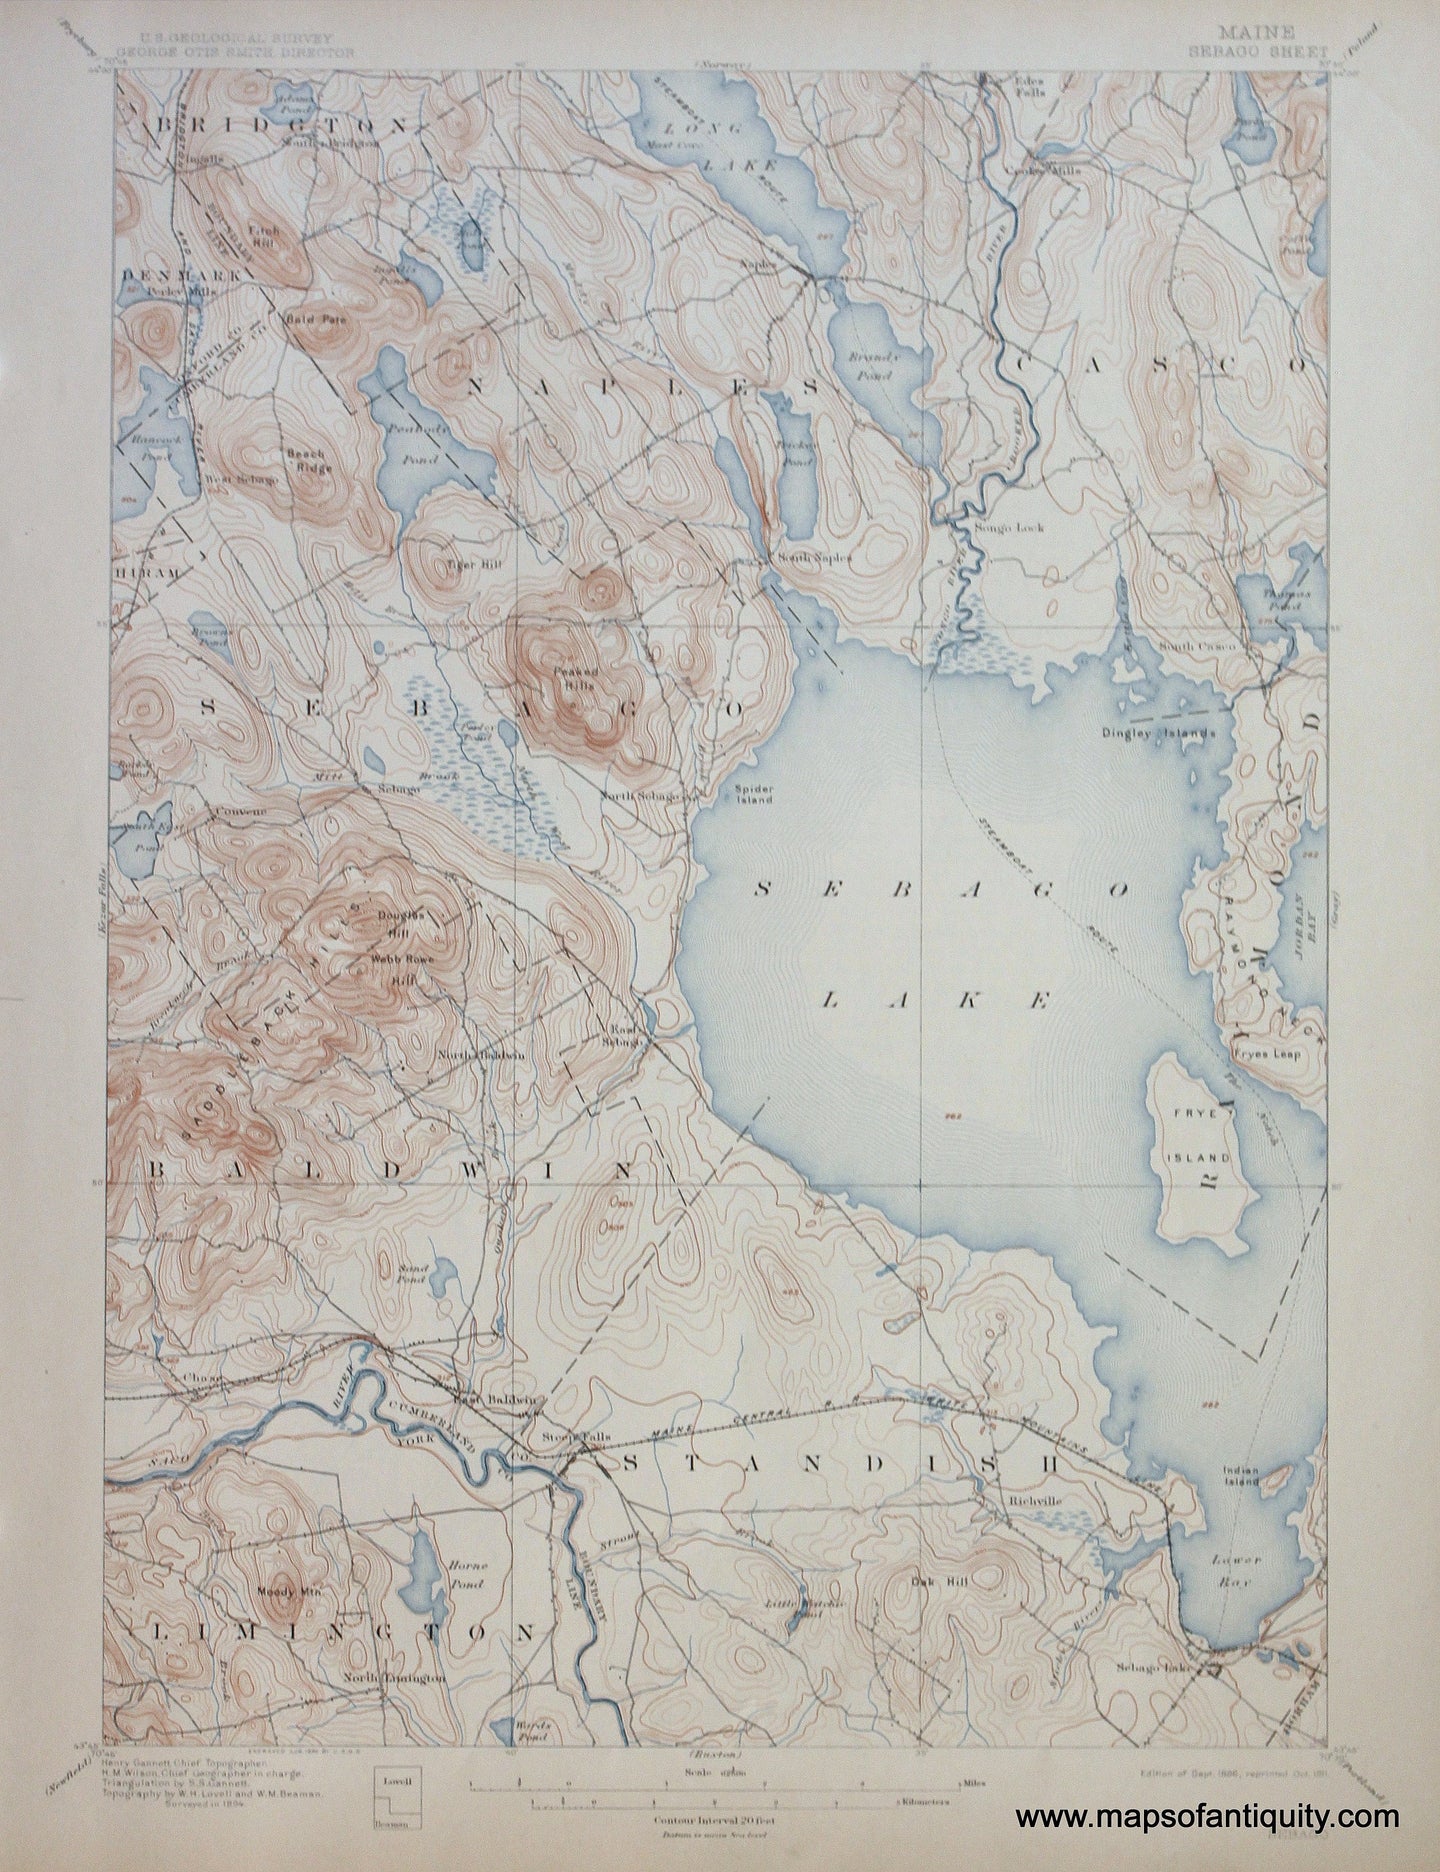 Genuine-Antique-Map-Sebago-Maine--1911-US-Geological-Survey--Maps-Of-Antiquity